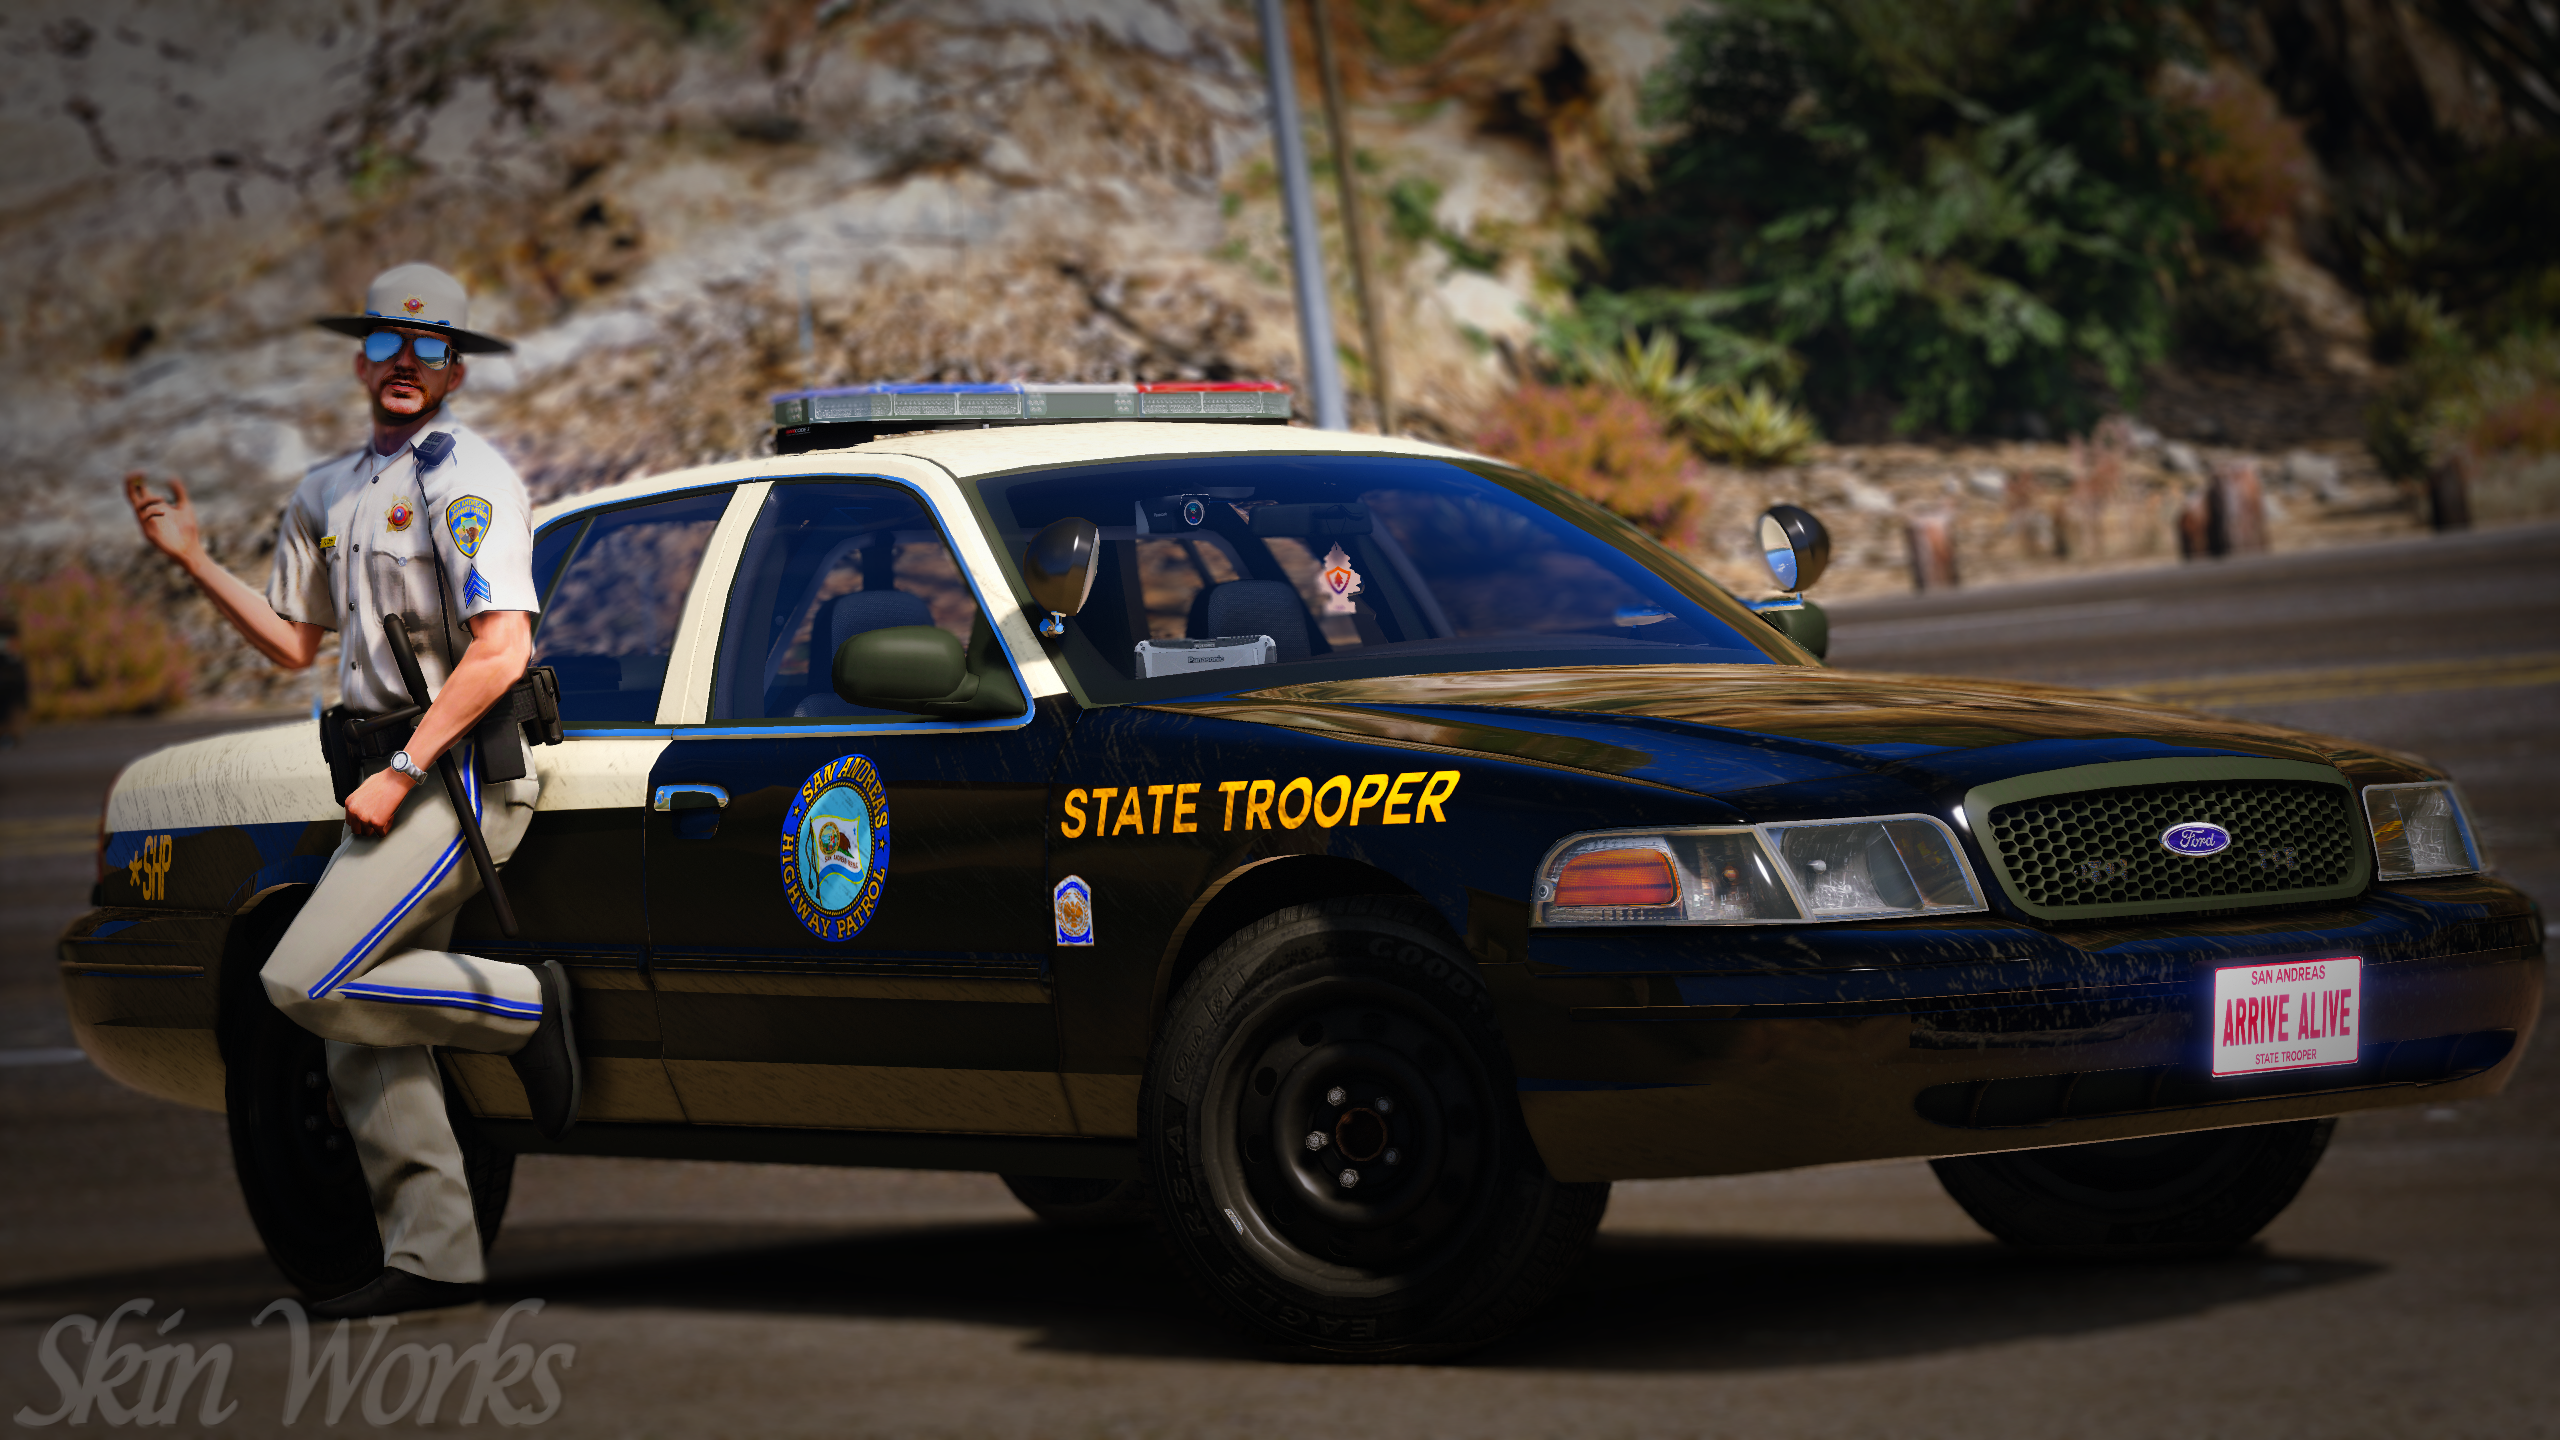 Ford Taurus Highway Patrol. Ford Taurus California Highway Patrol. Highway Patrol Лос Анджелес. San Andreas Highway Patrol.